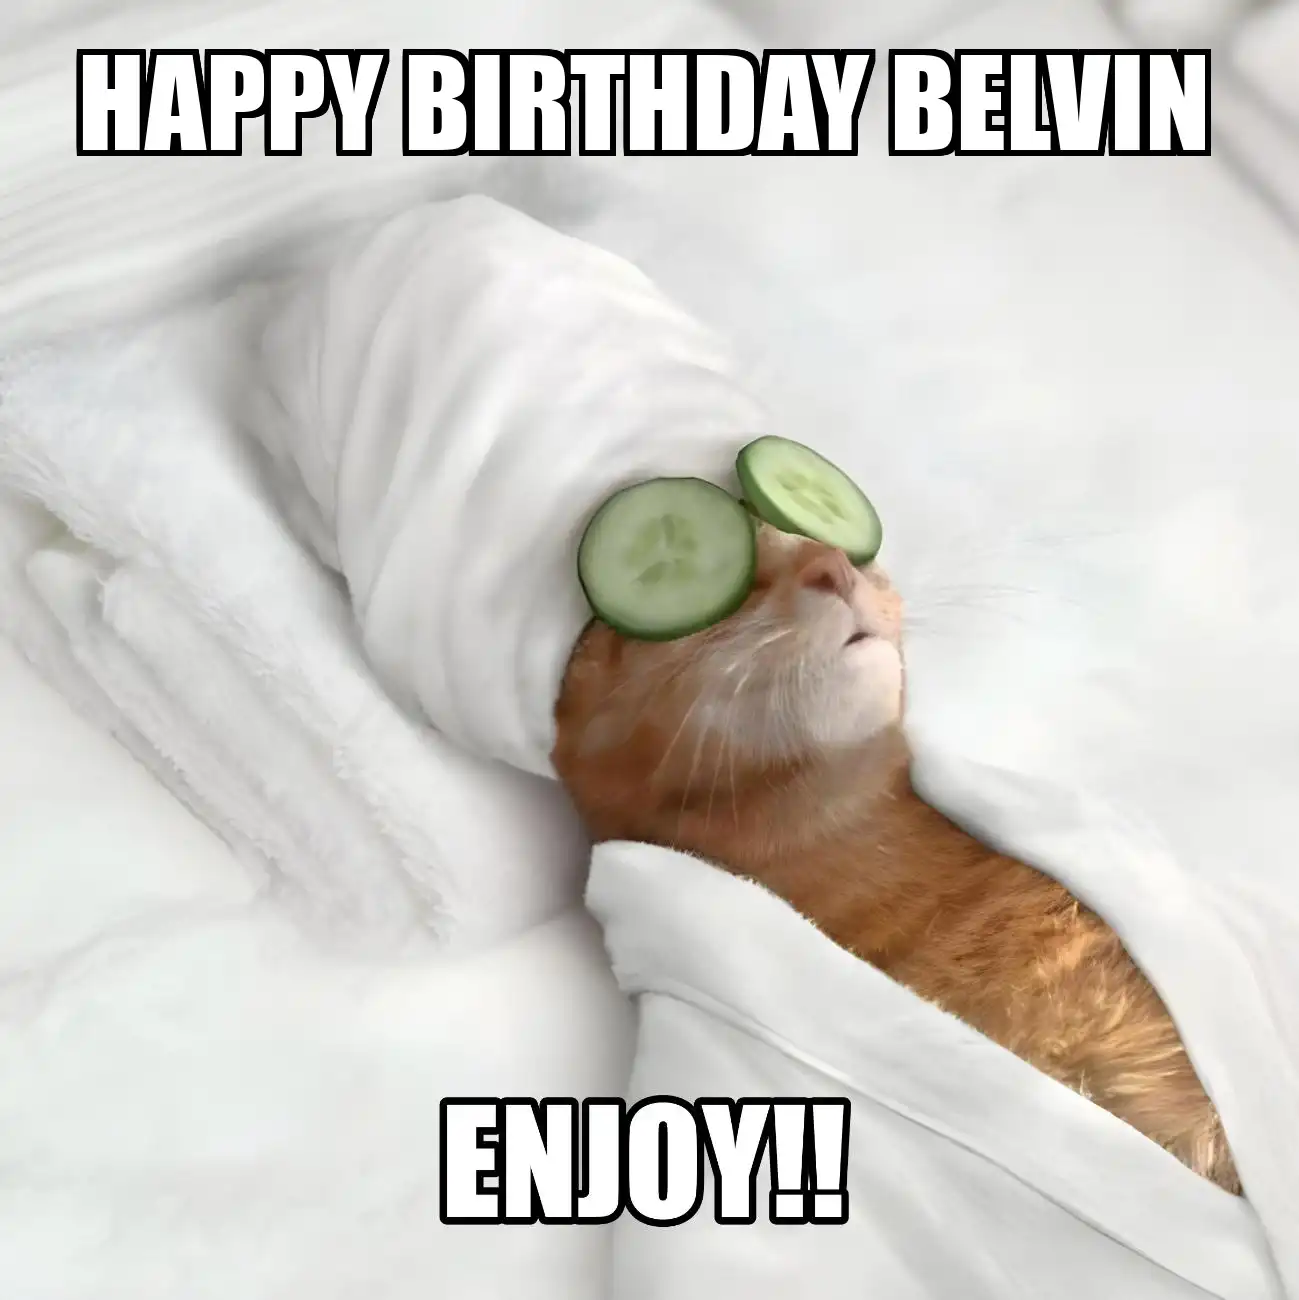 Happy Birthday Belvin Enjoy Cat Meme